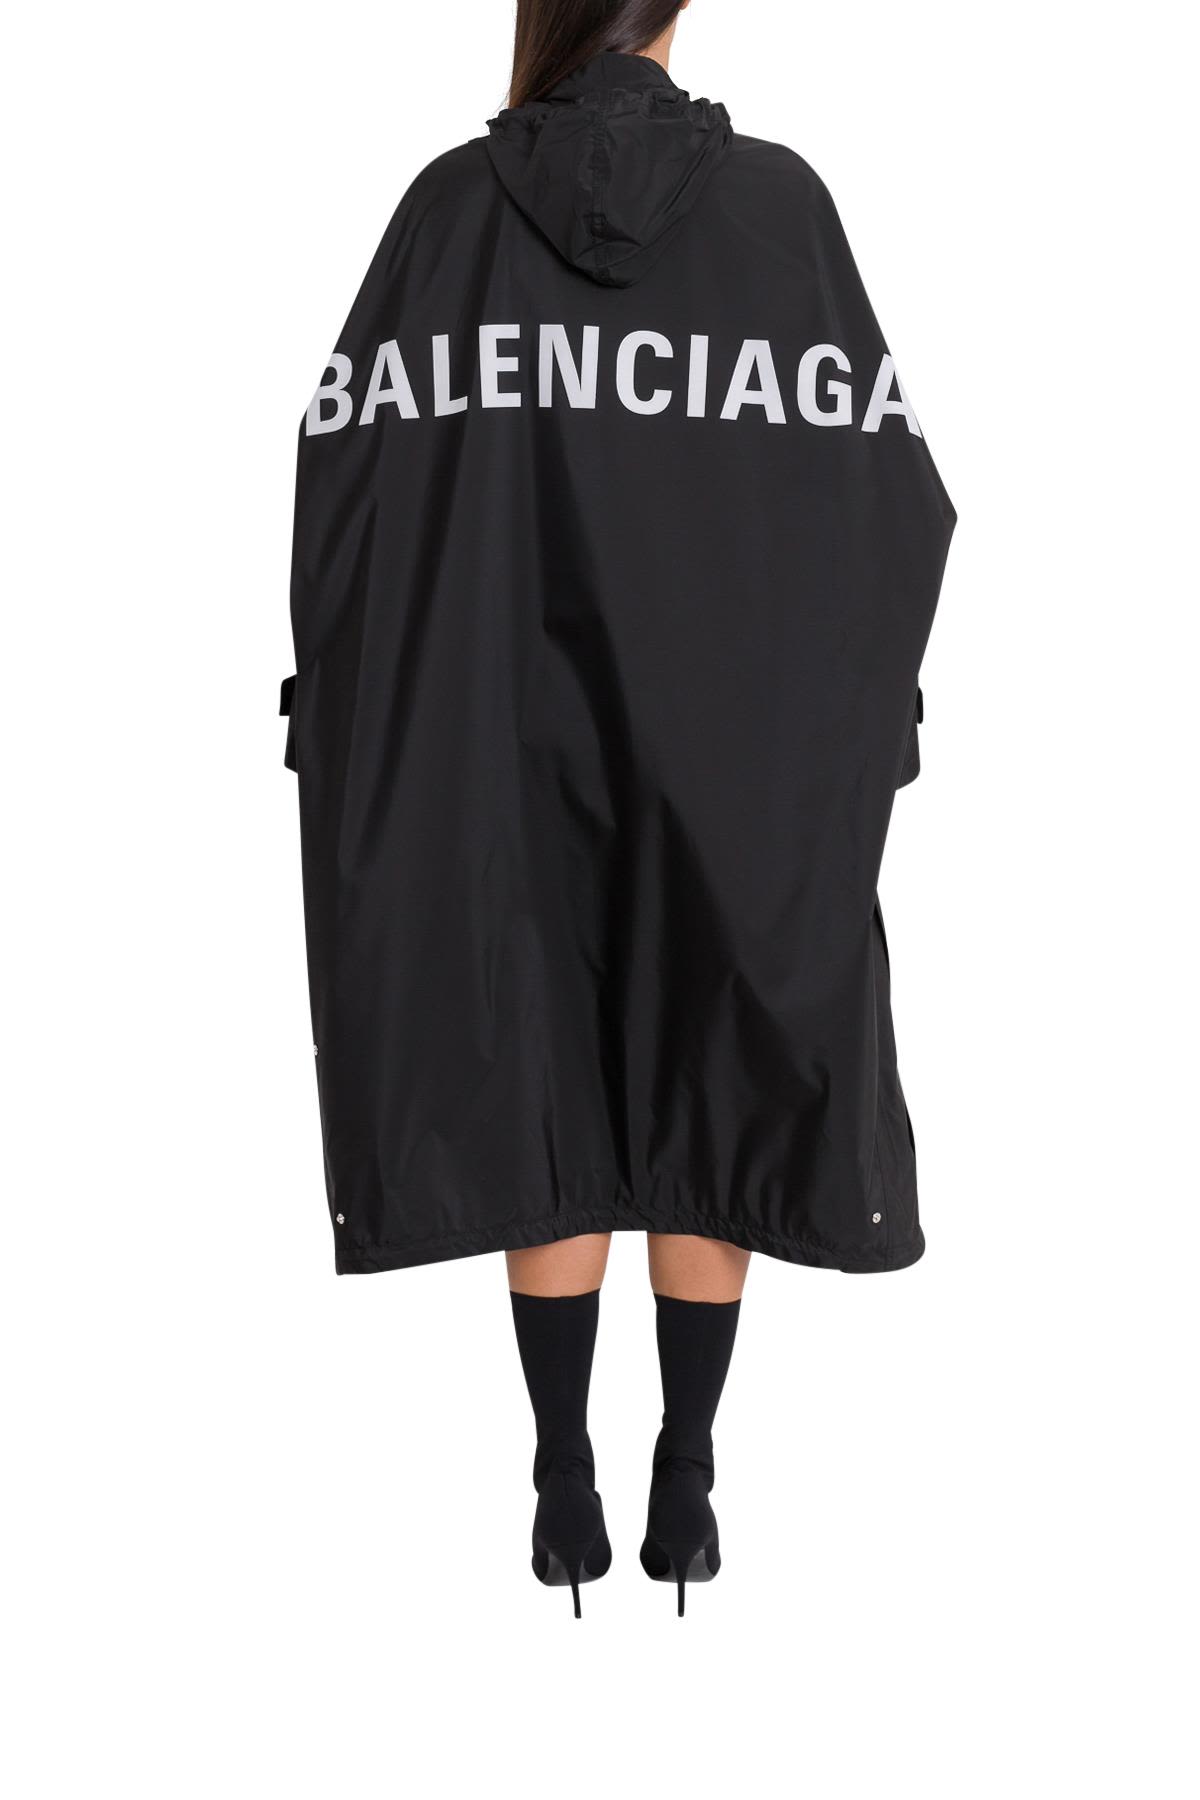 italist | Best price in the market for Balenciaga Balenciaga Opera Rain